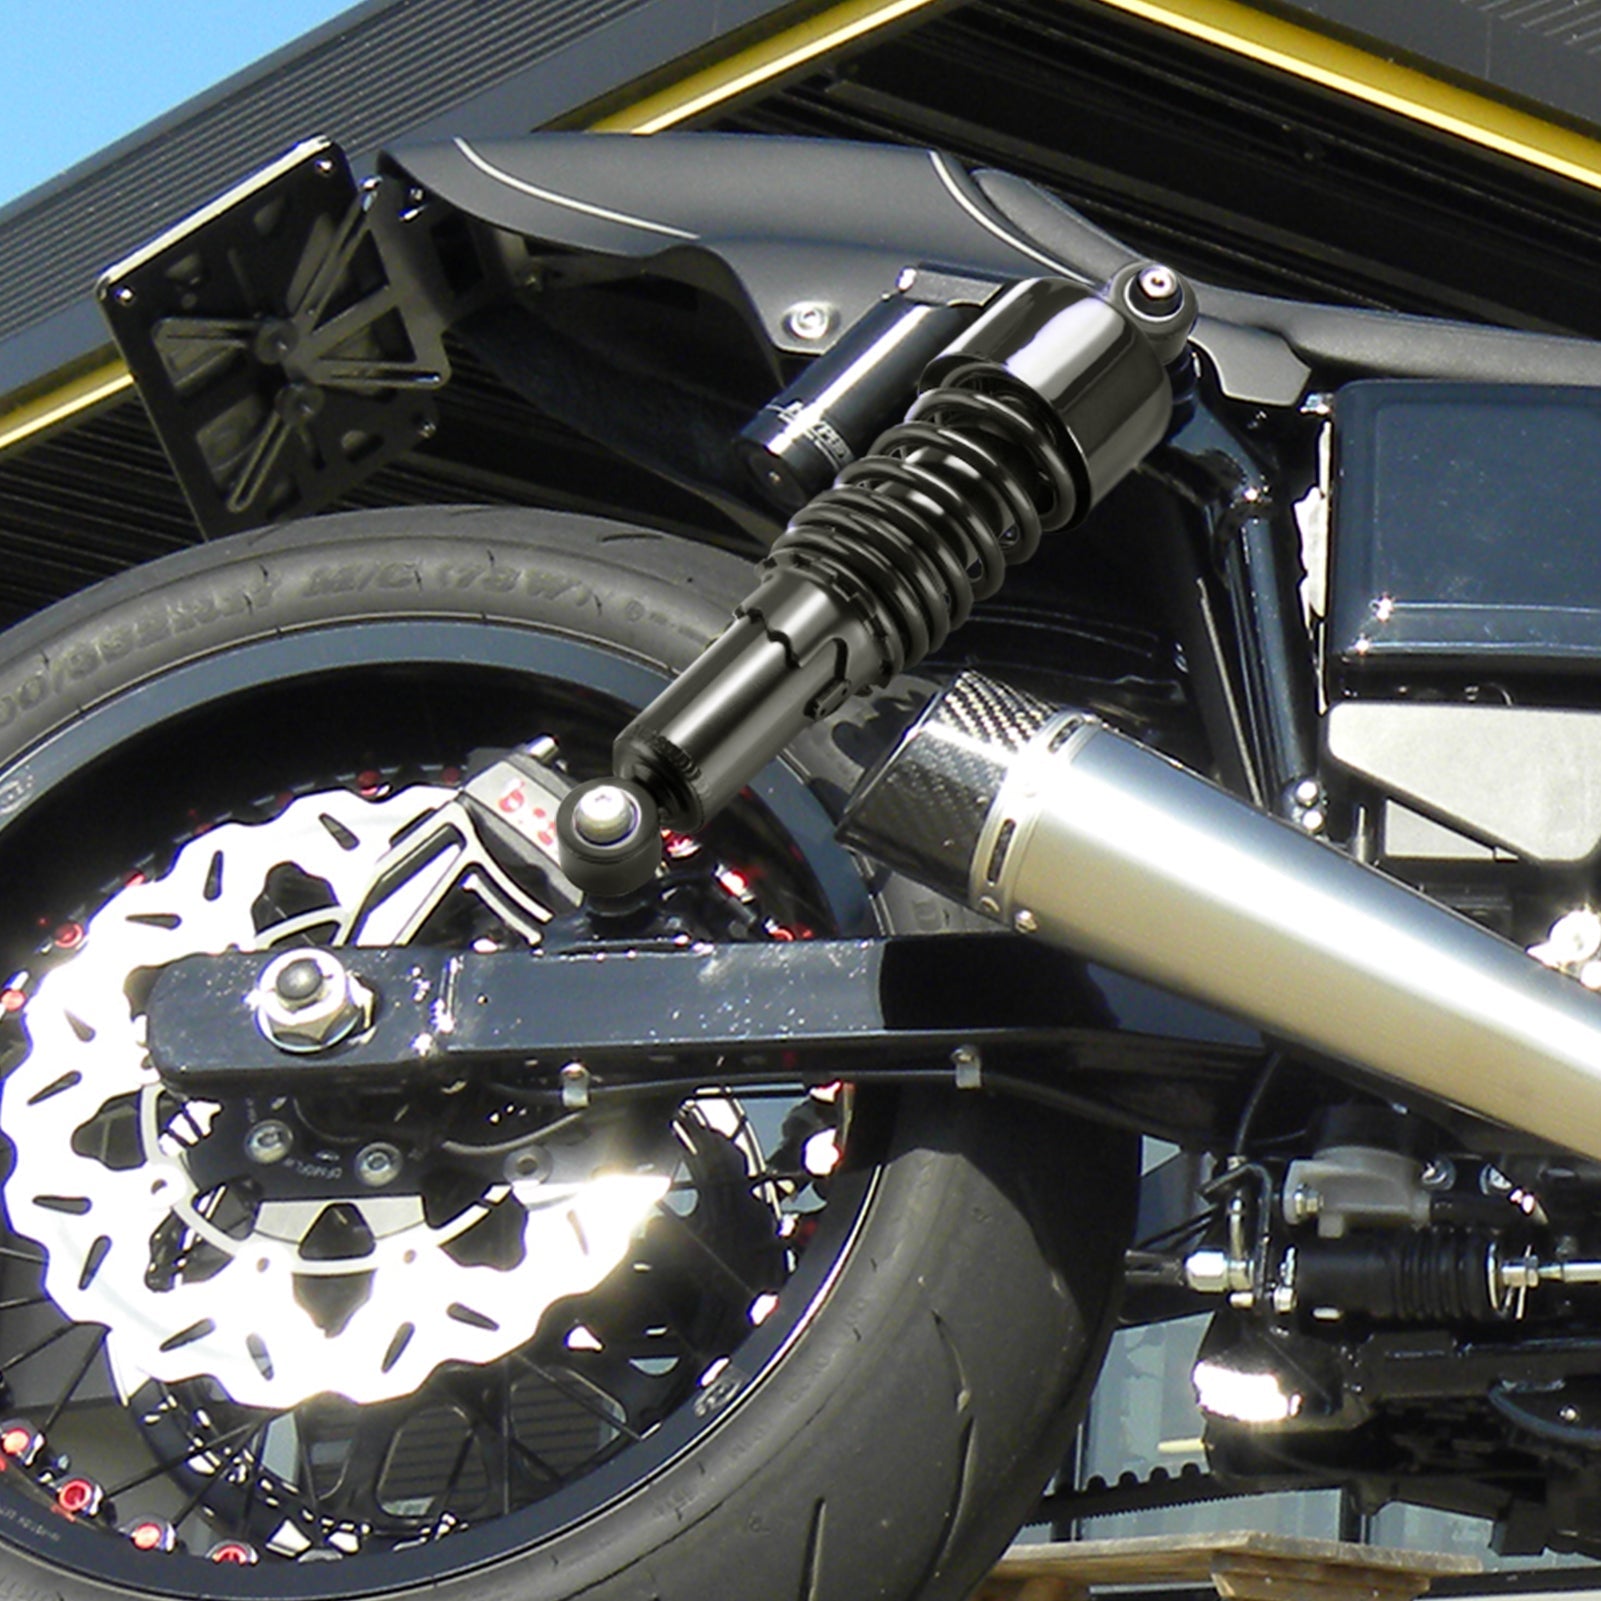 Harley Sportster Iron 883 1200 XL 10.5"/267mm Preload Adjustable Motorcycle Rear Absorber Shocks